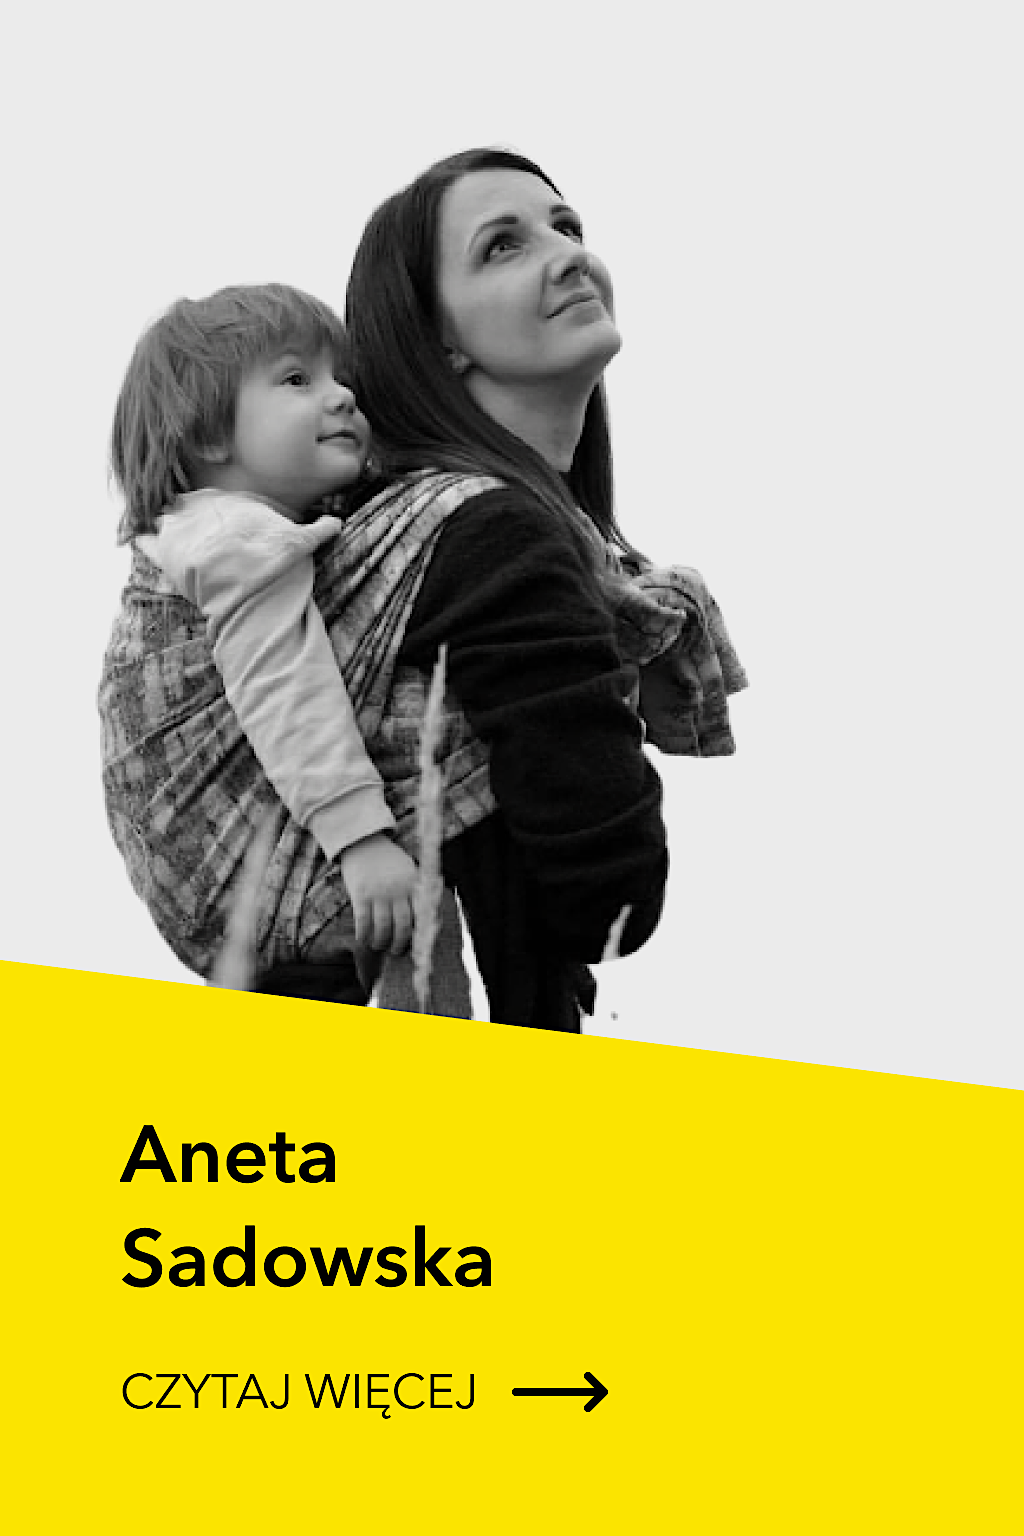 Aneta Sadowska